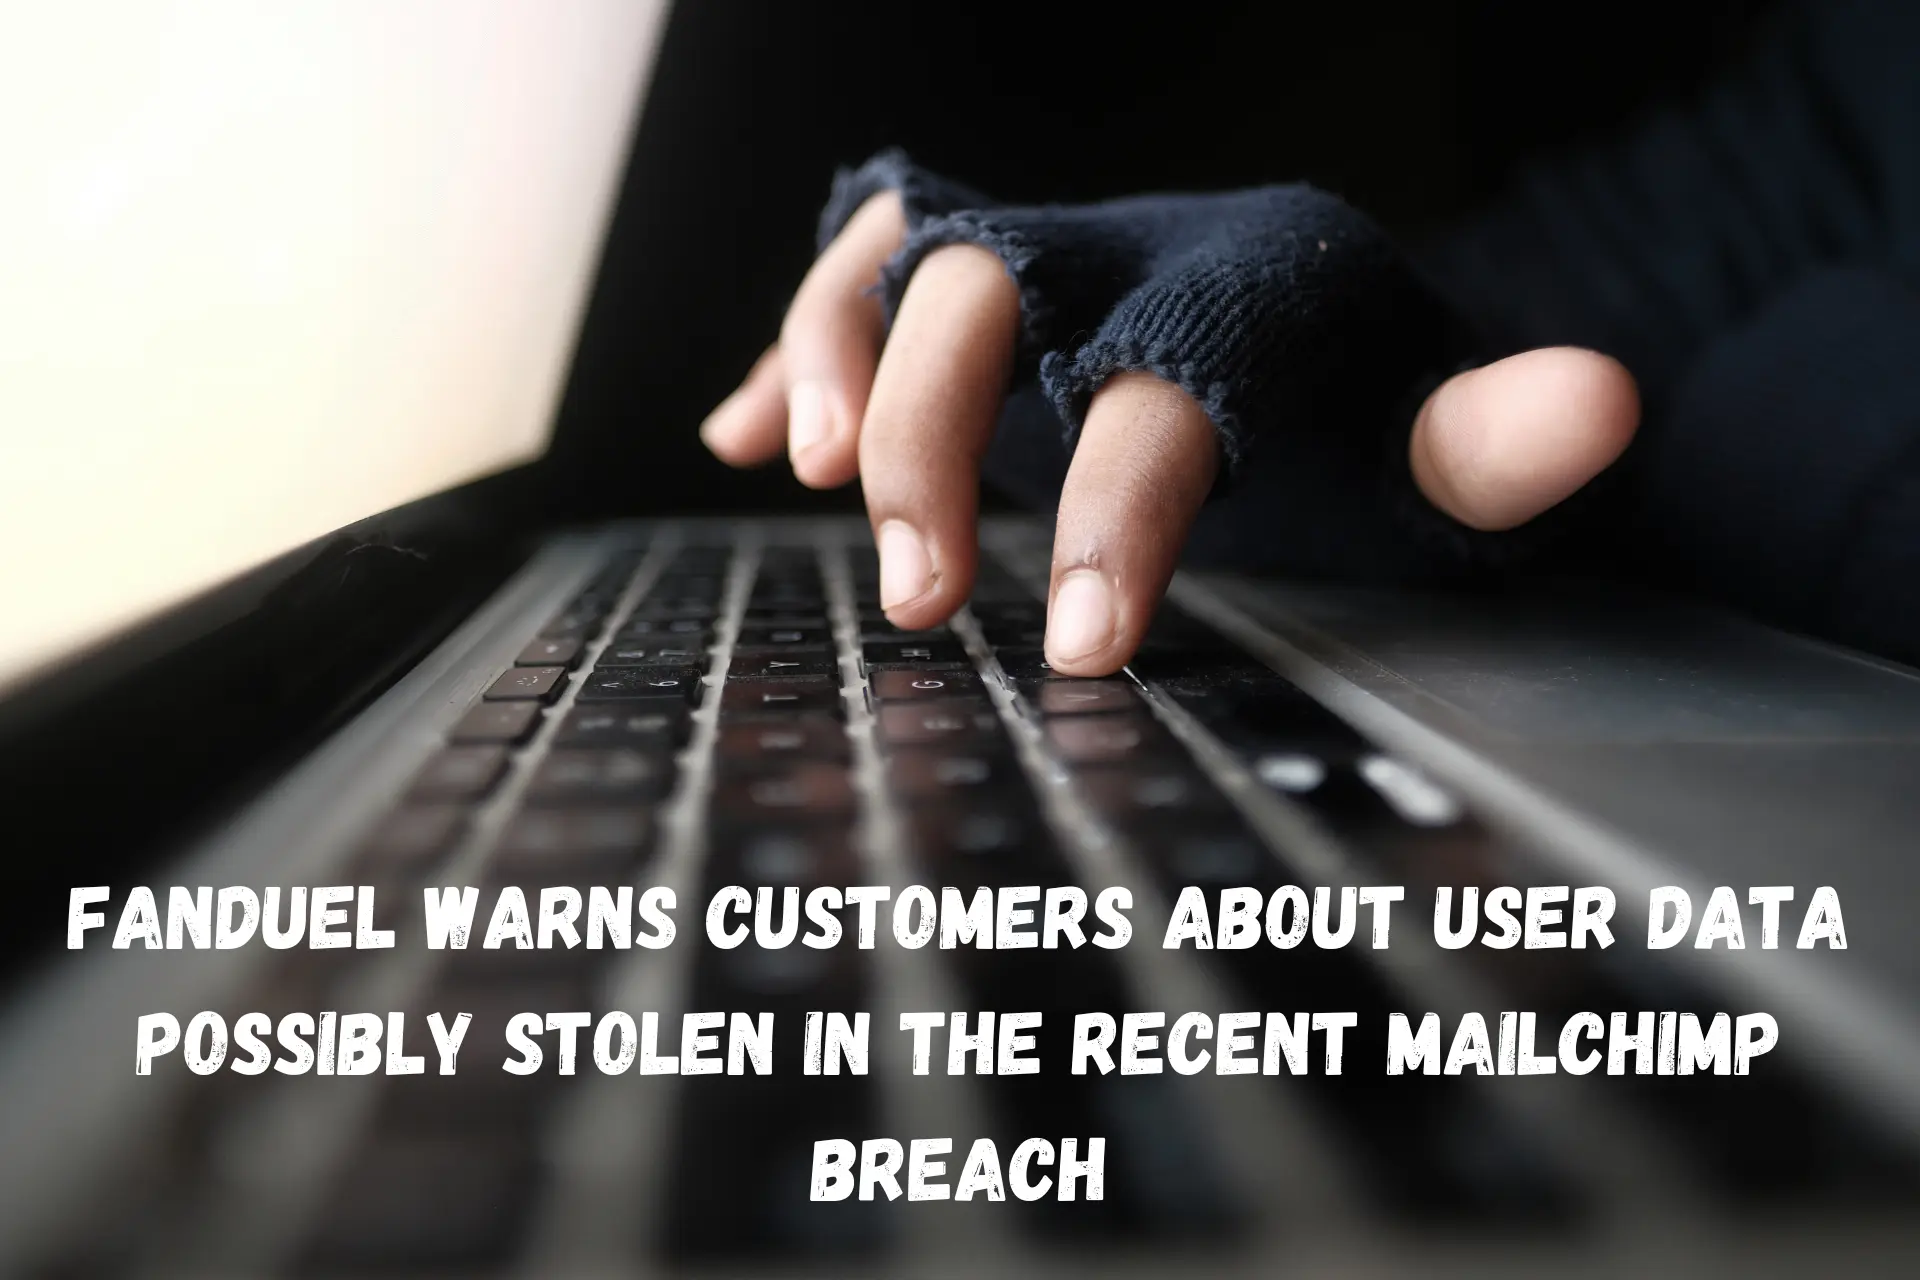 FanDuel Warns About Possibly Stolen User Data in a Breach